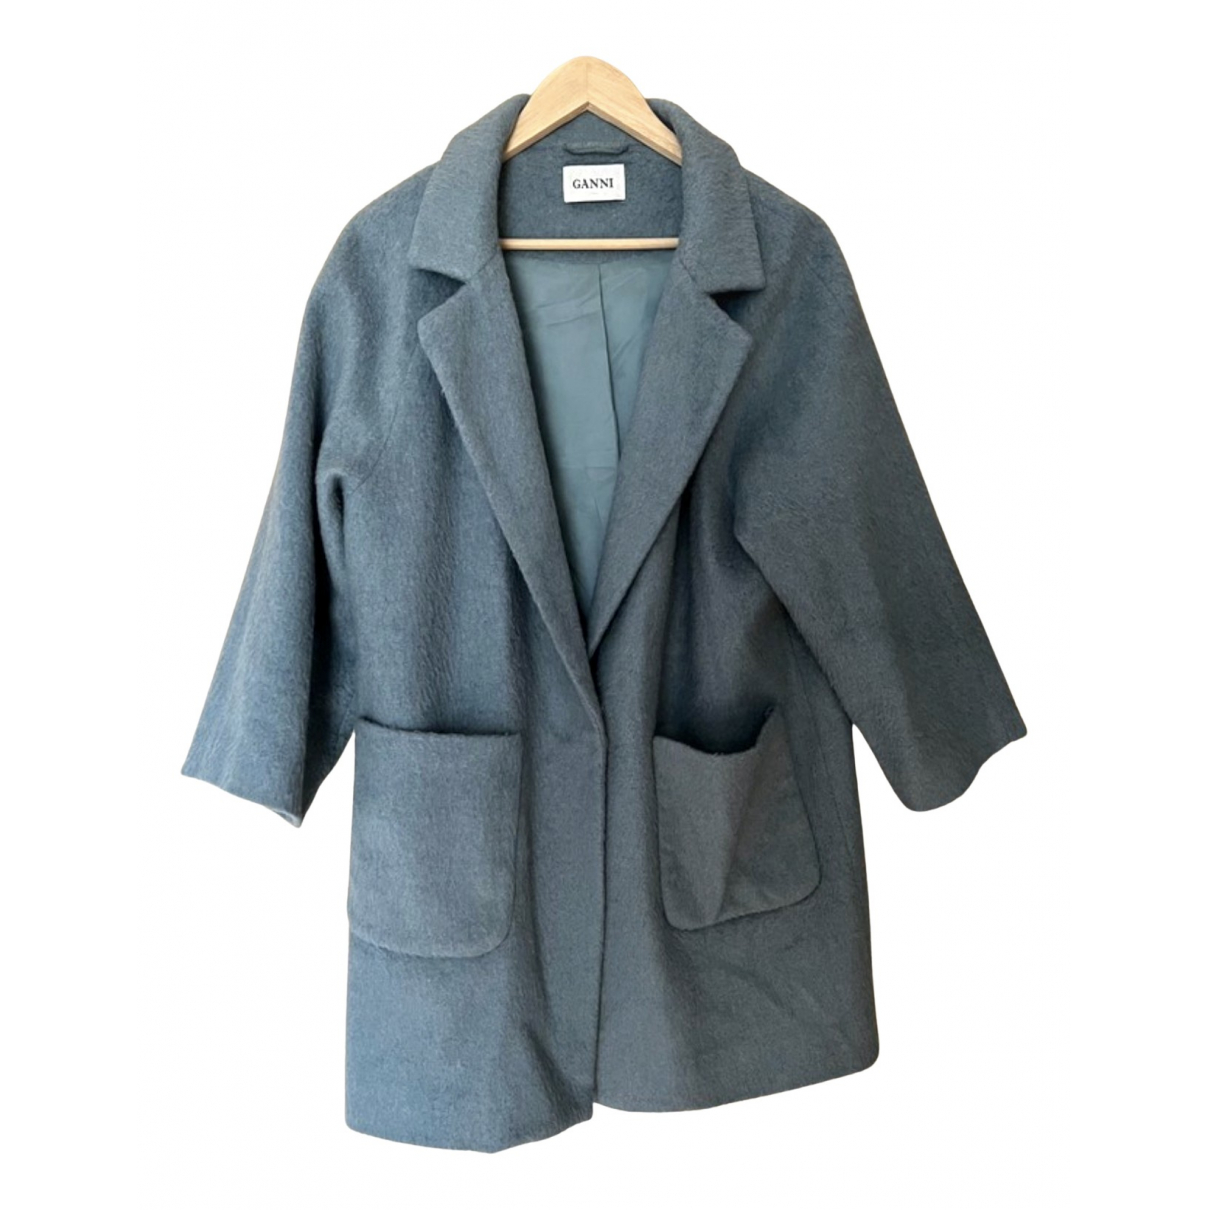 Ganni Wool coat